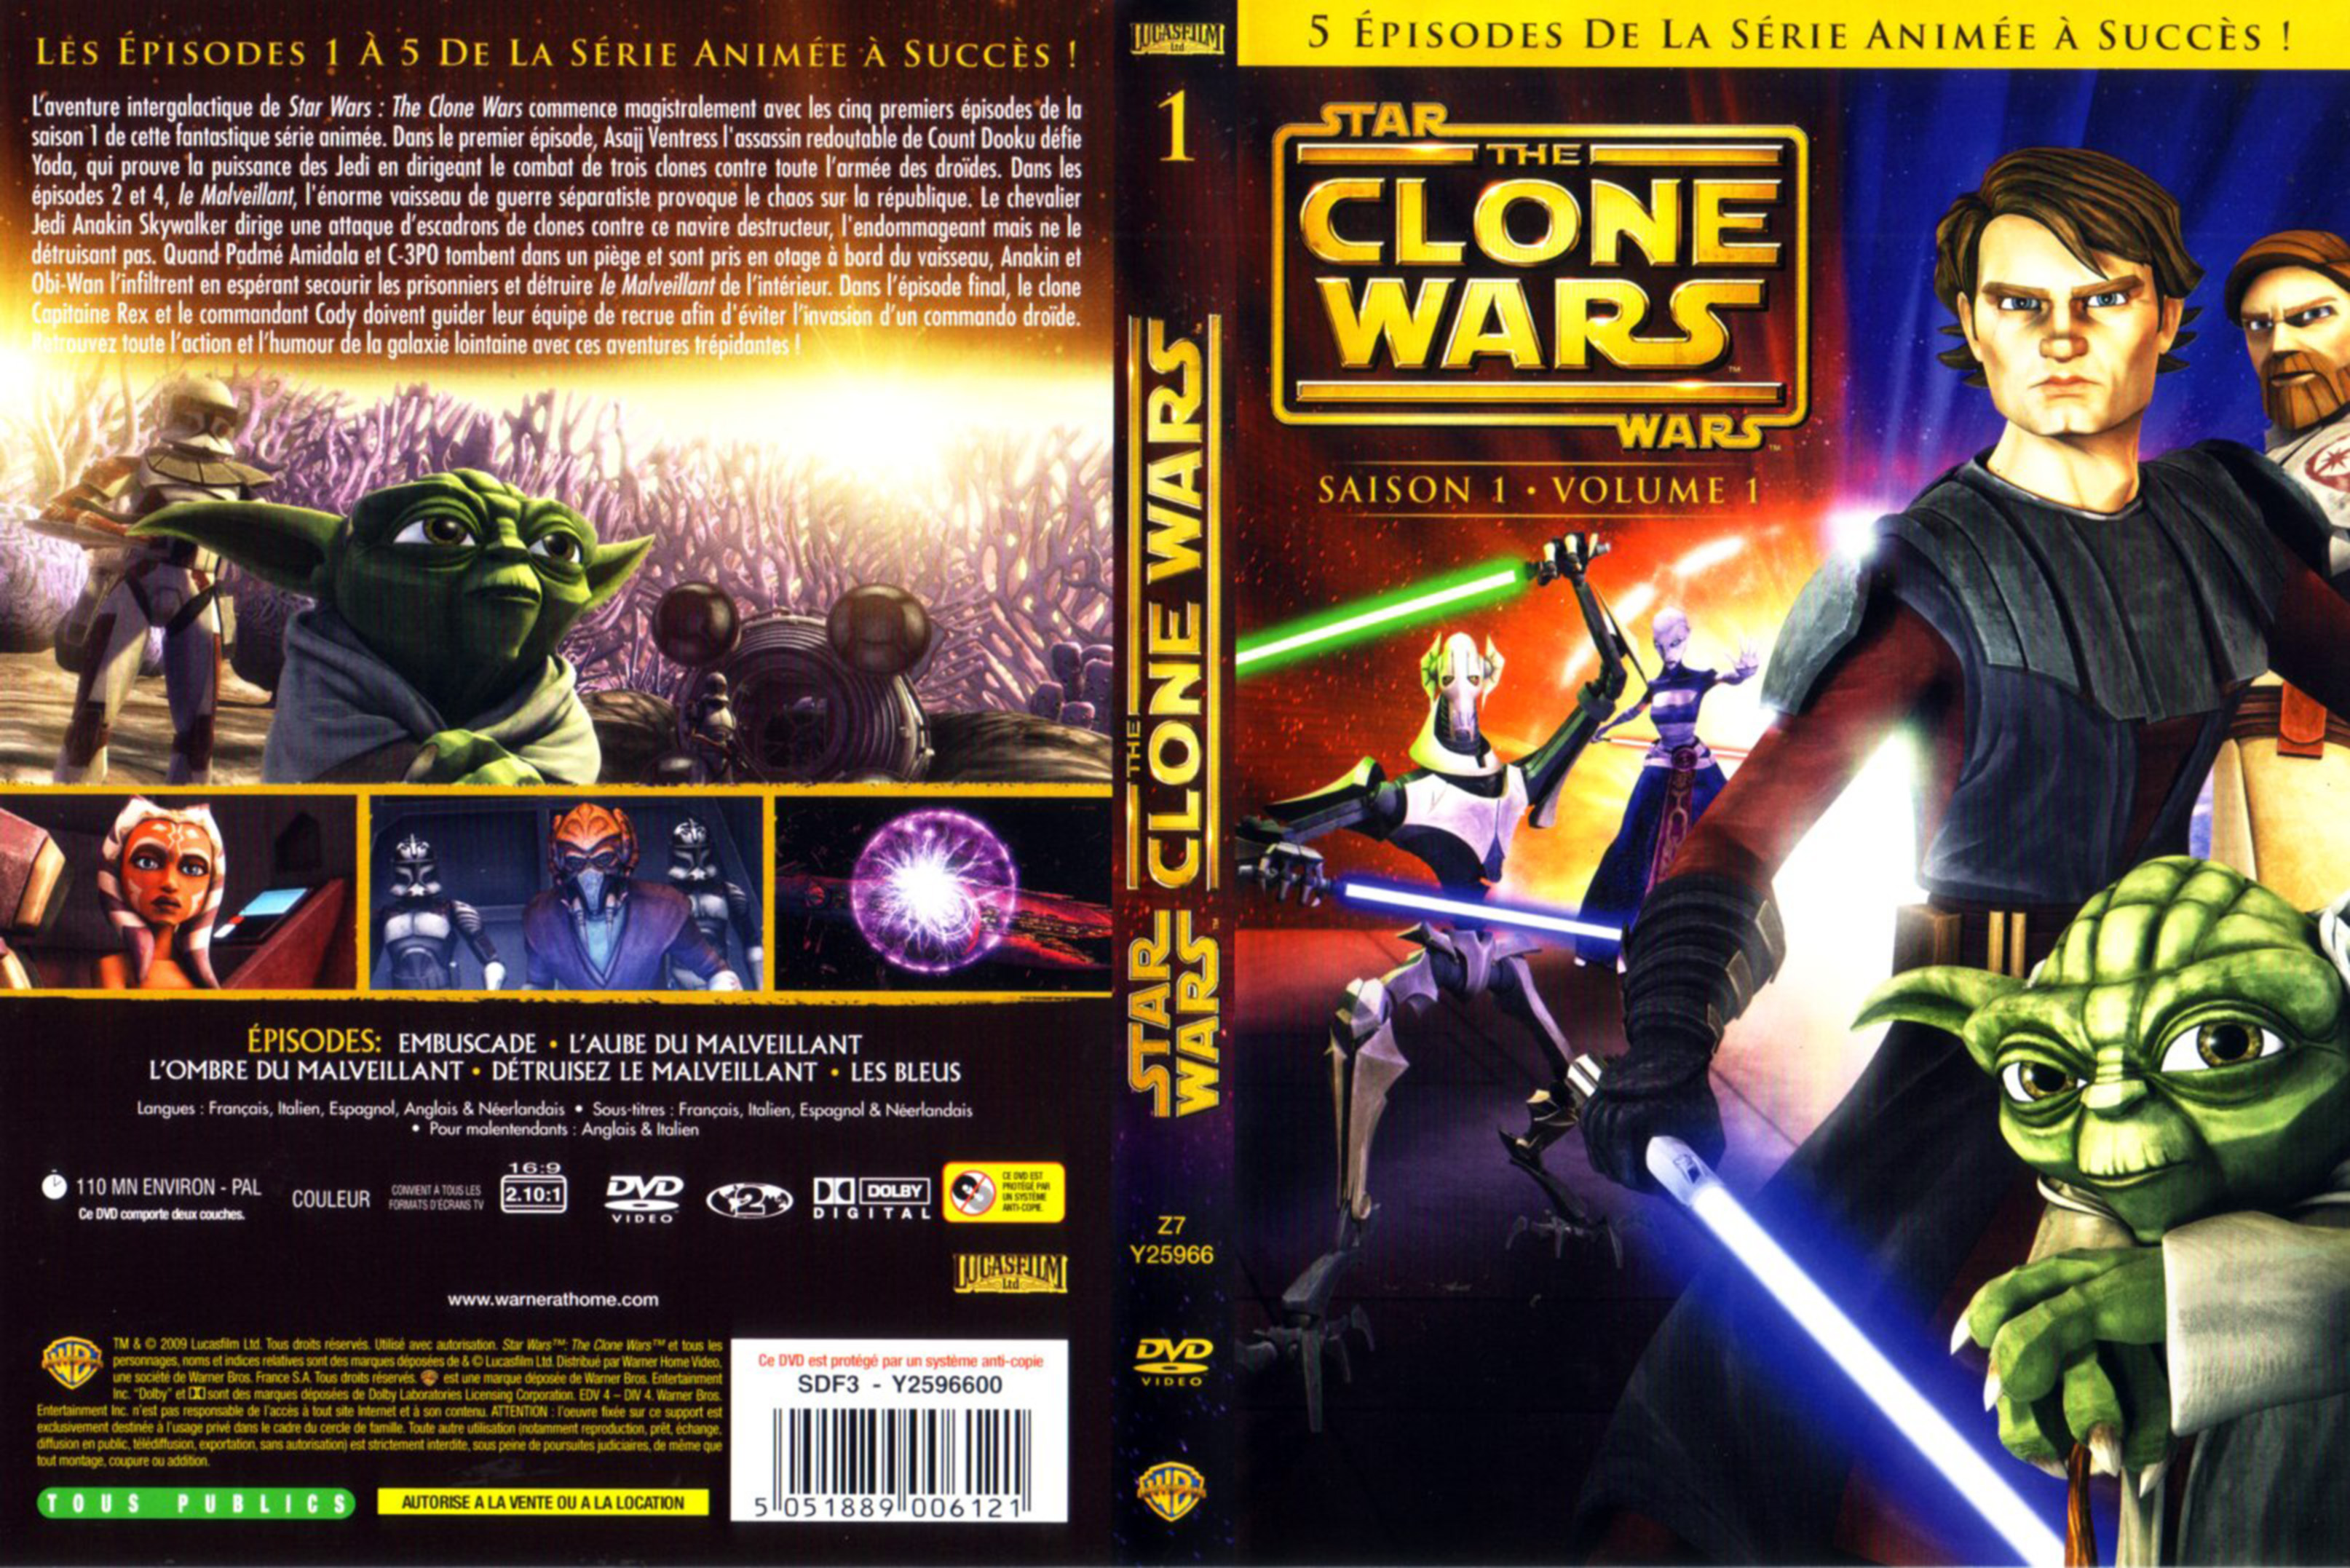 Jaquette DVD Star Wars The Clone Wars - Saison 1 Vol 1